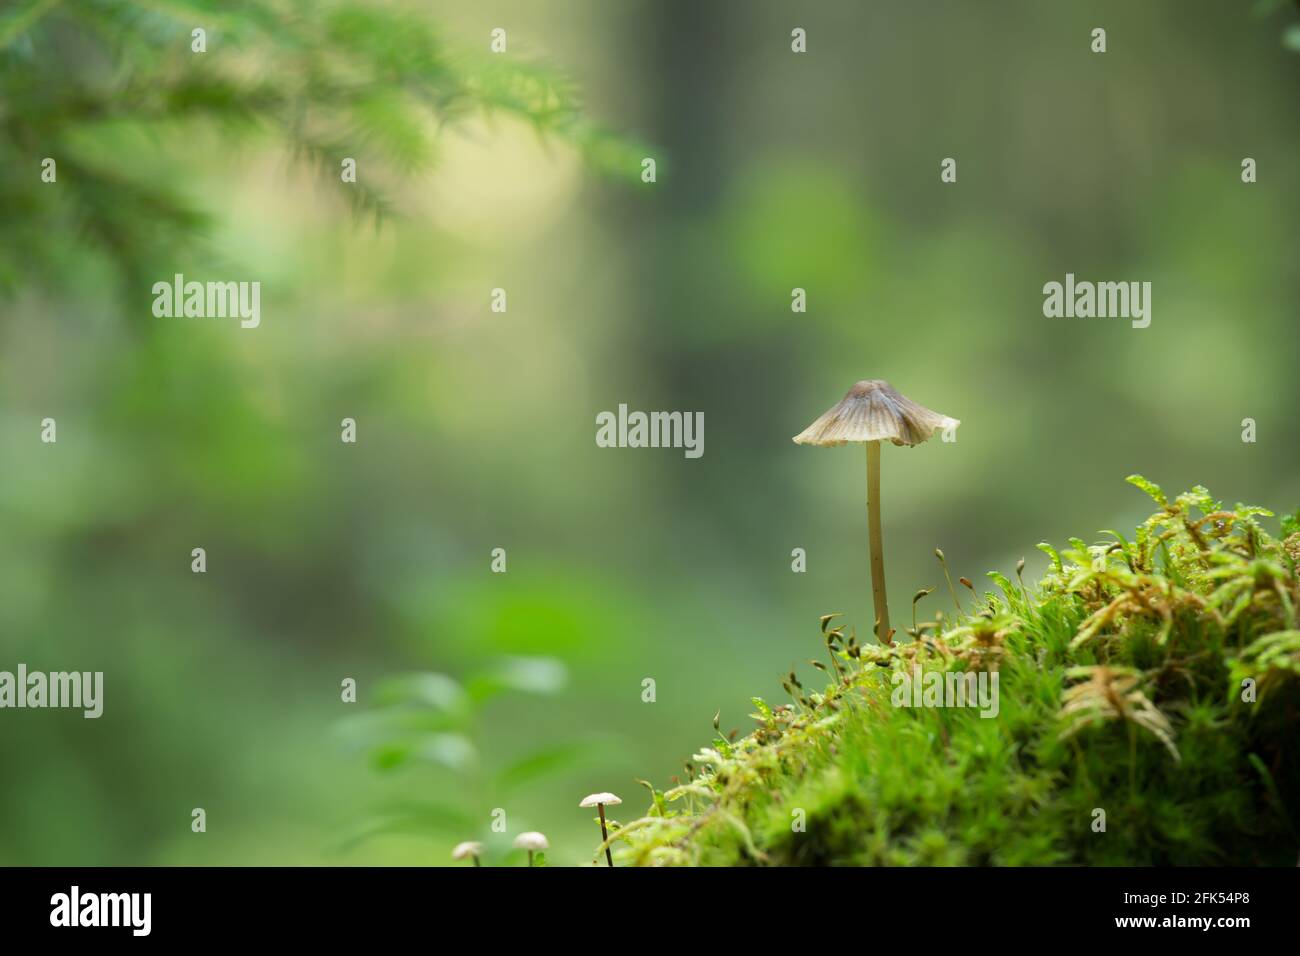 Mycena mushroom growing in moss in forest Stock Photo